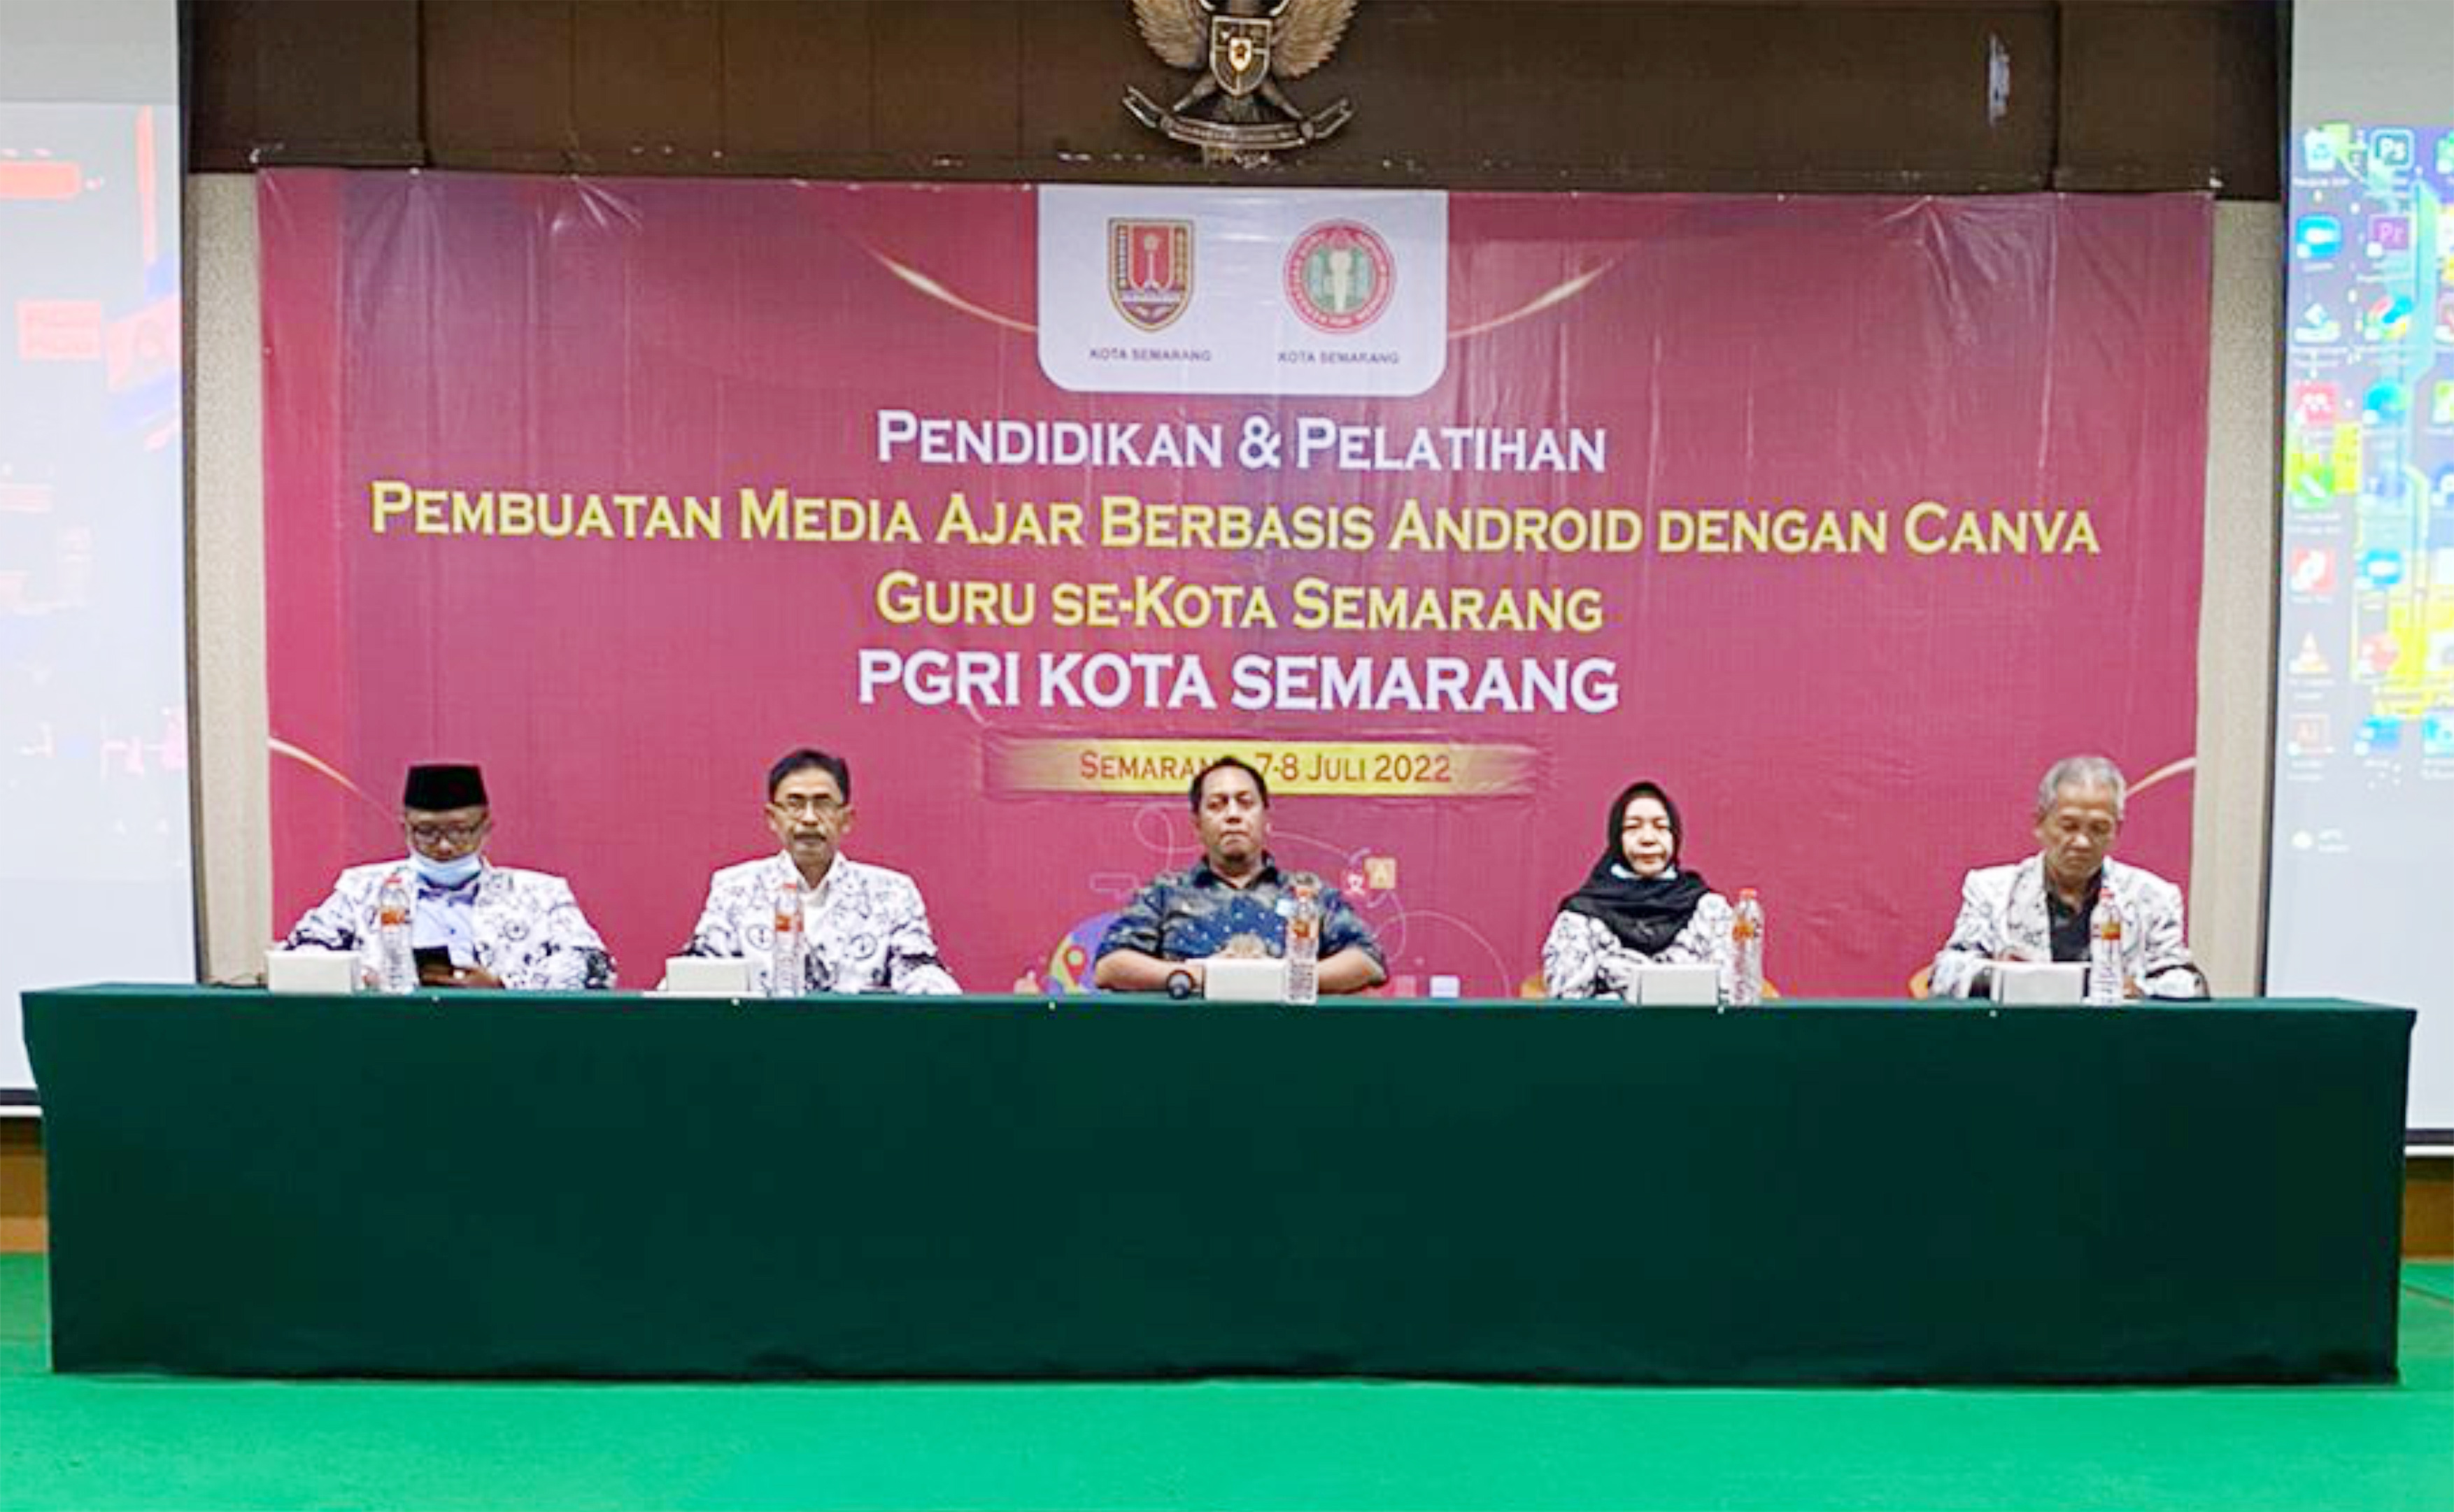 Pendidikan dan Pelatihan Pembuatan Media Ajar Berbasis Android dengan Canva Guru se-Kota Semarang